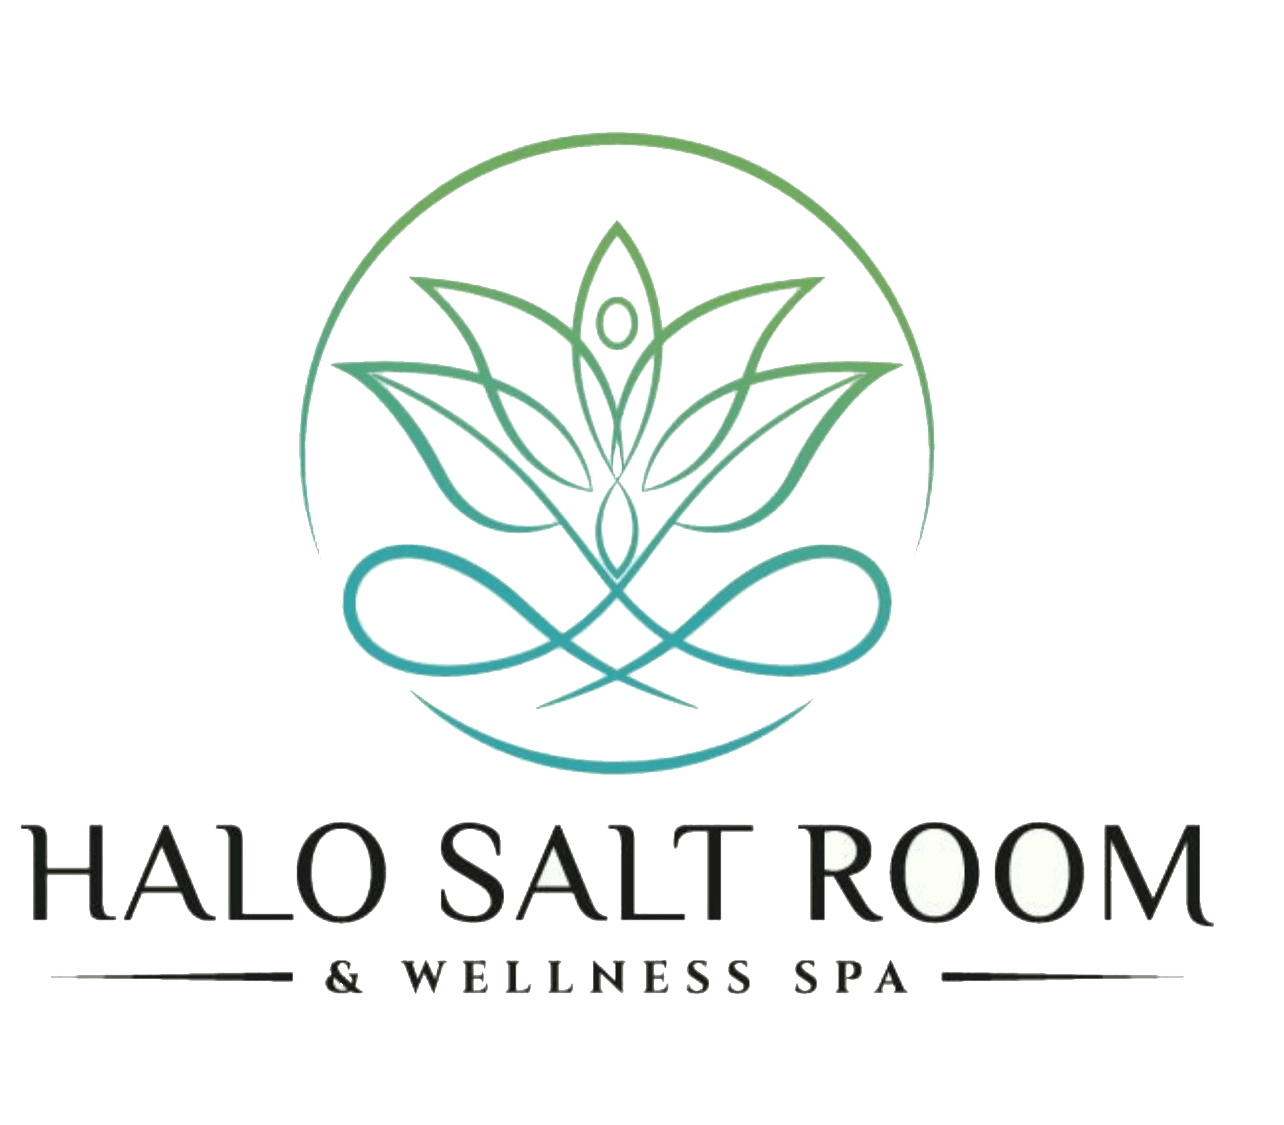 Halo Salt Room & Wellness Spa